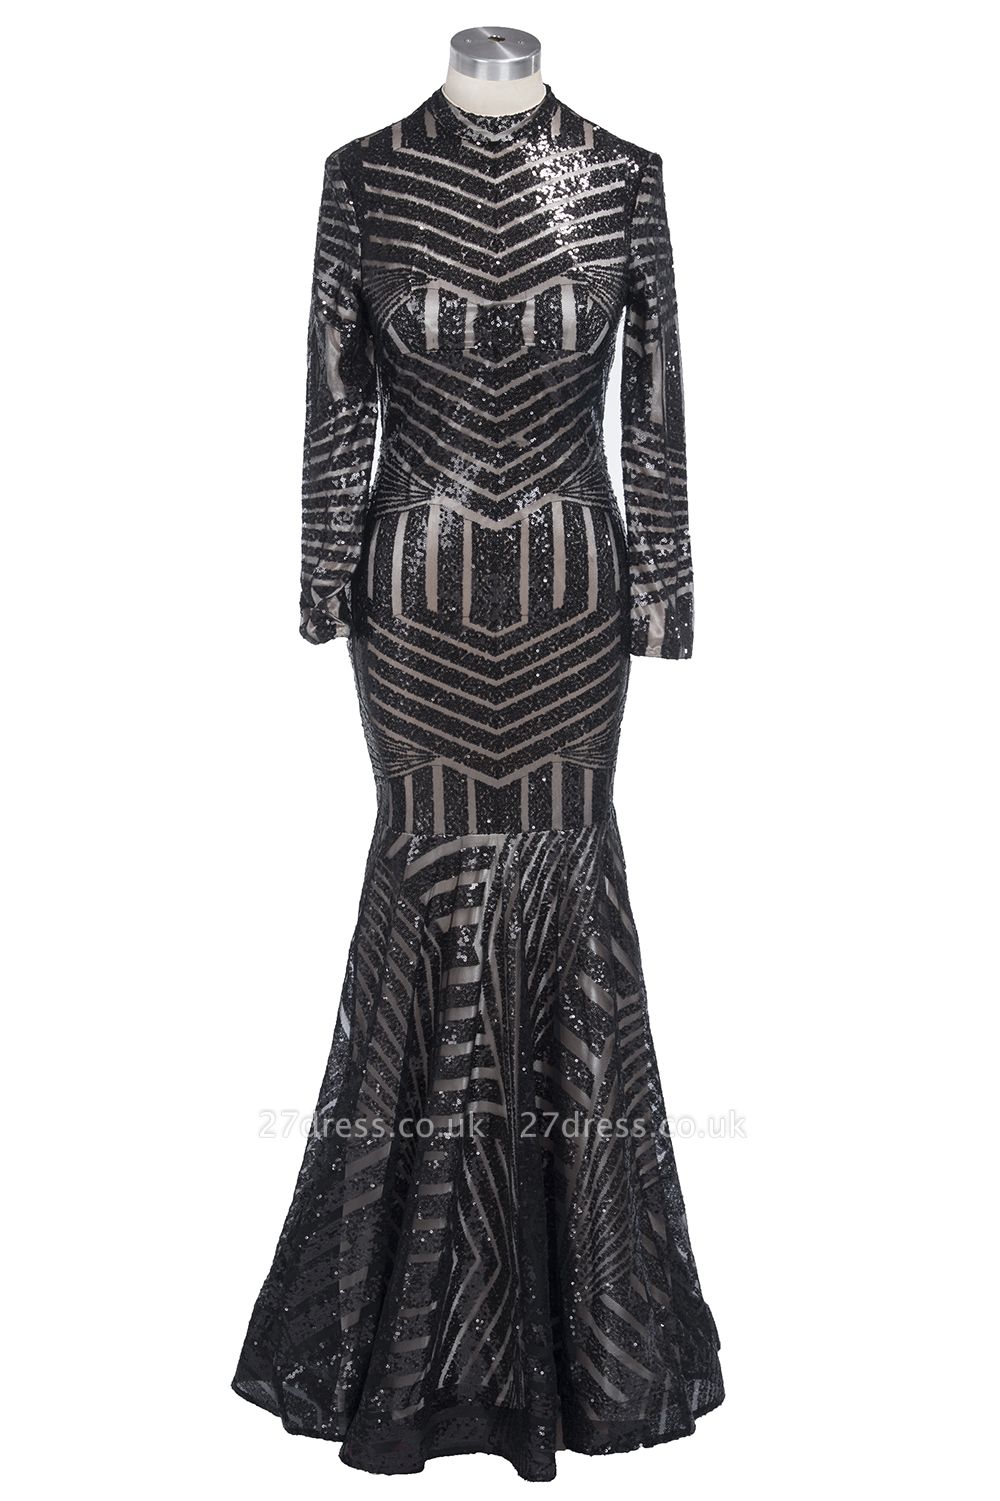 Sequined Black Mermaid High-Neck Elegant Long-Sleeves Prom Dress UK jj0085